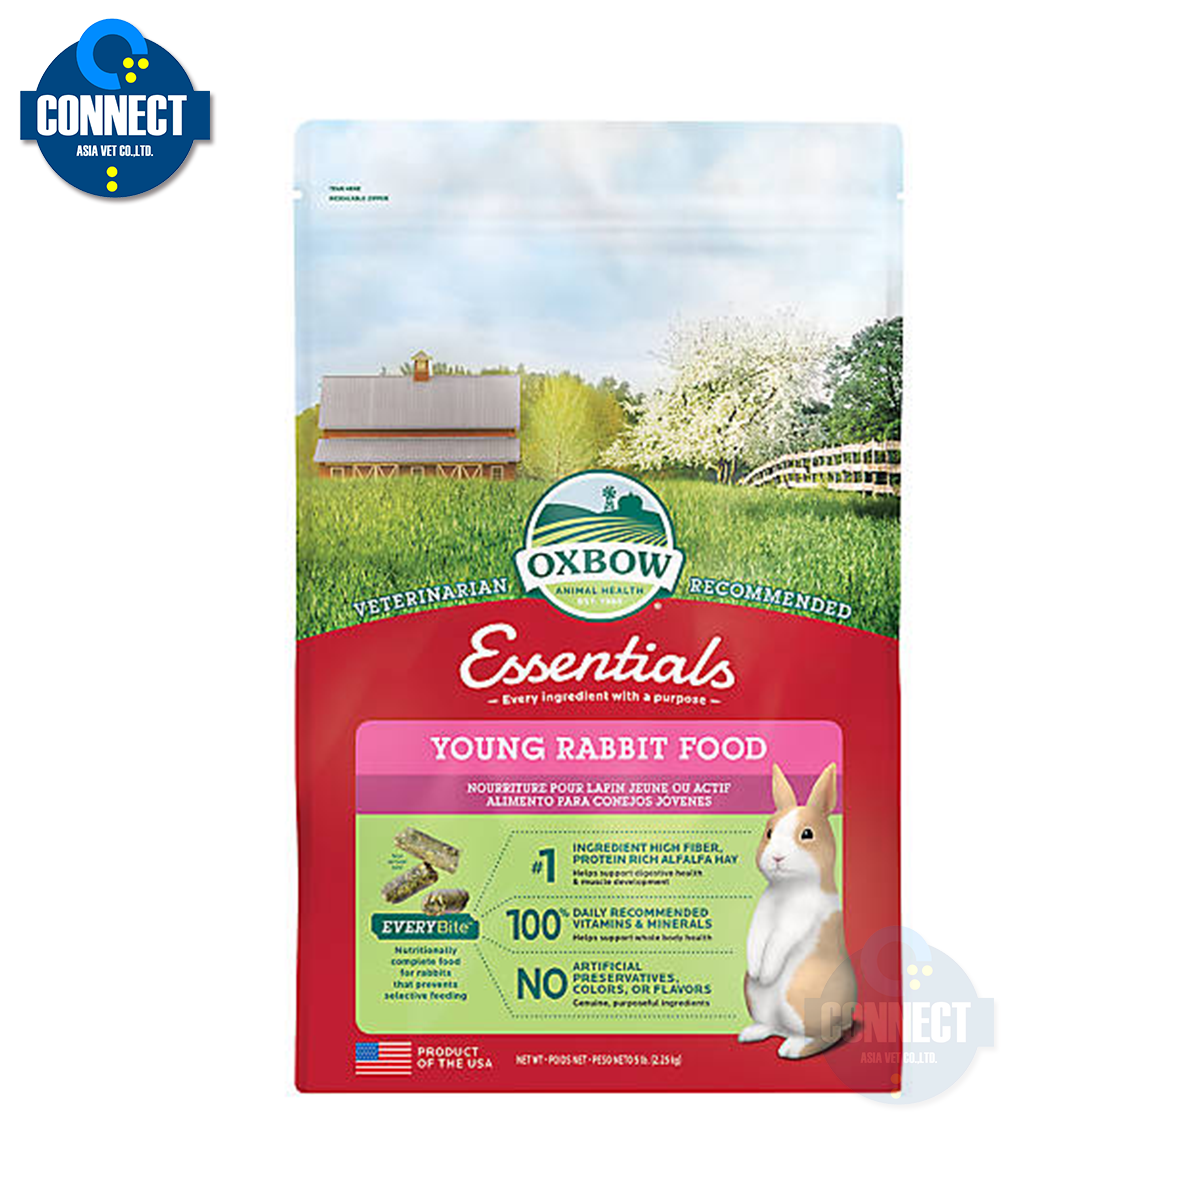 Oxbow - Essentials – Young Rabbit Food ขนาดถุง 2.3 กิโลกรัม.